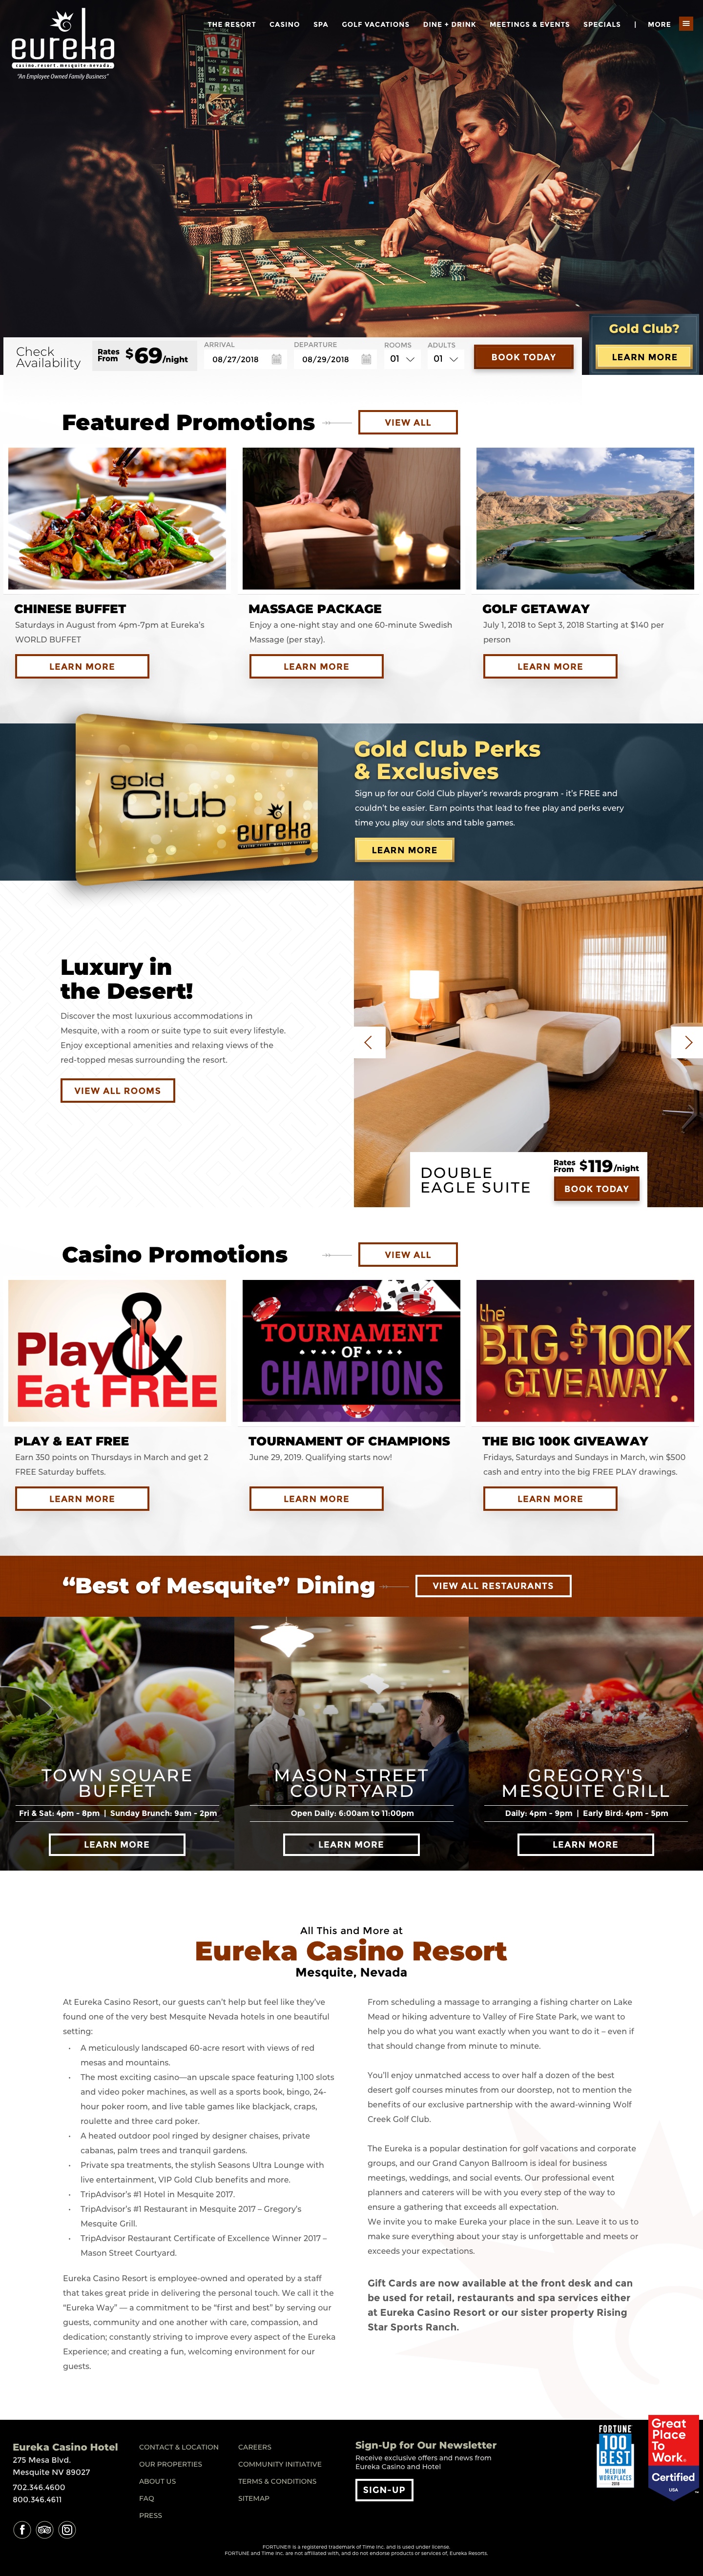 Eureka Casino Resort - Home Page Design